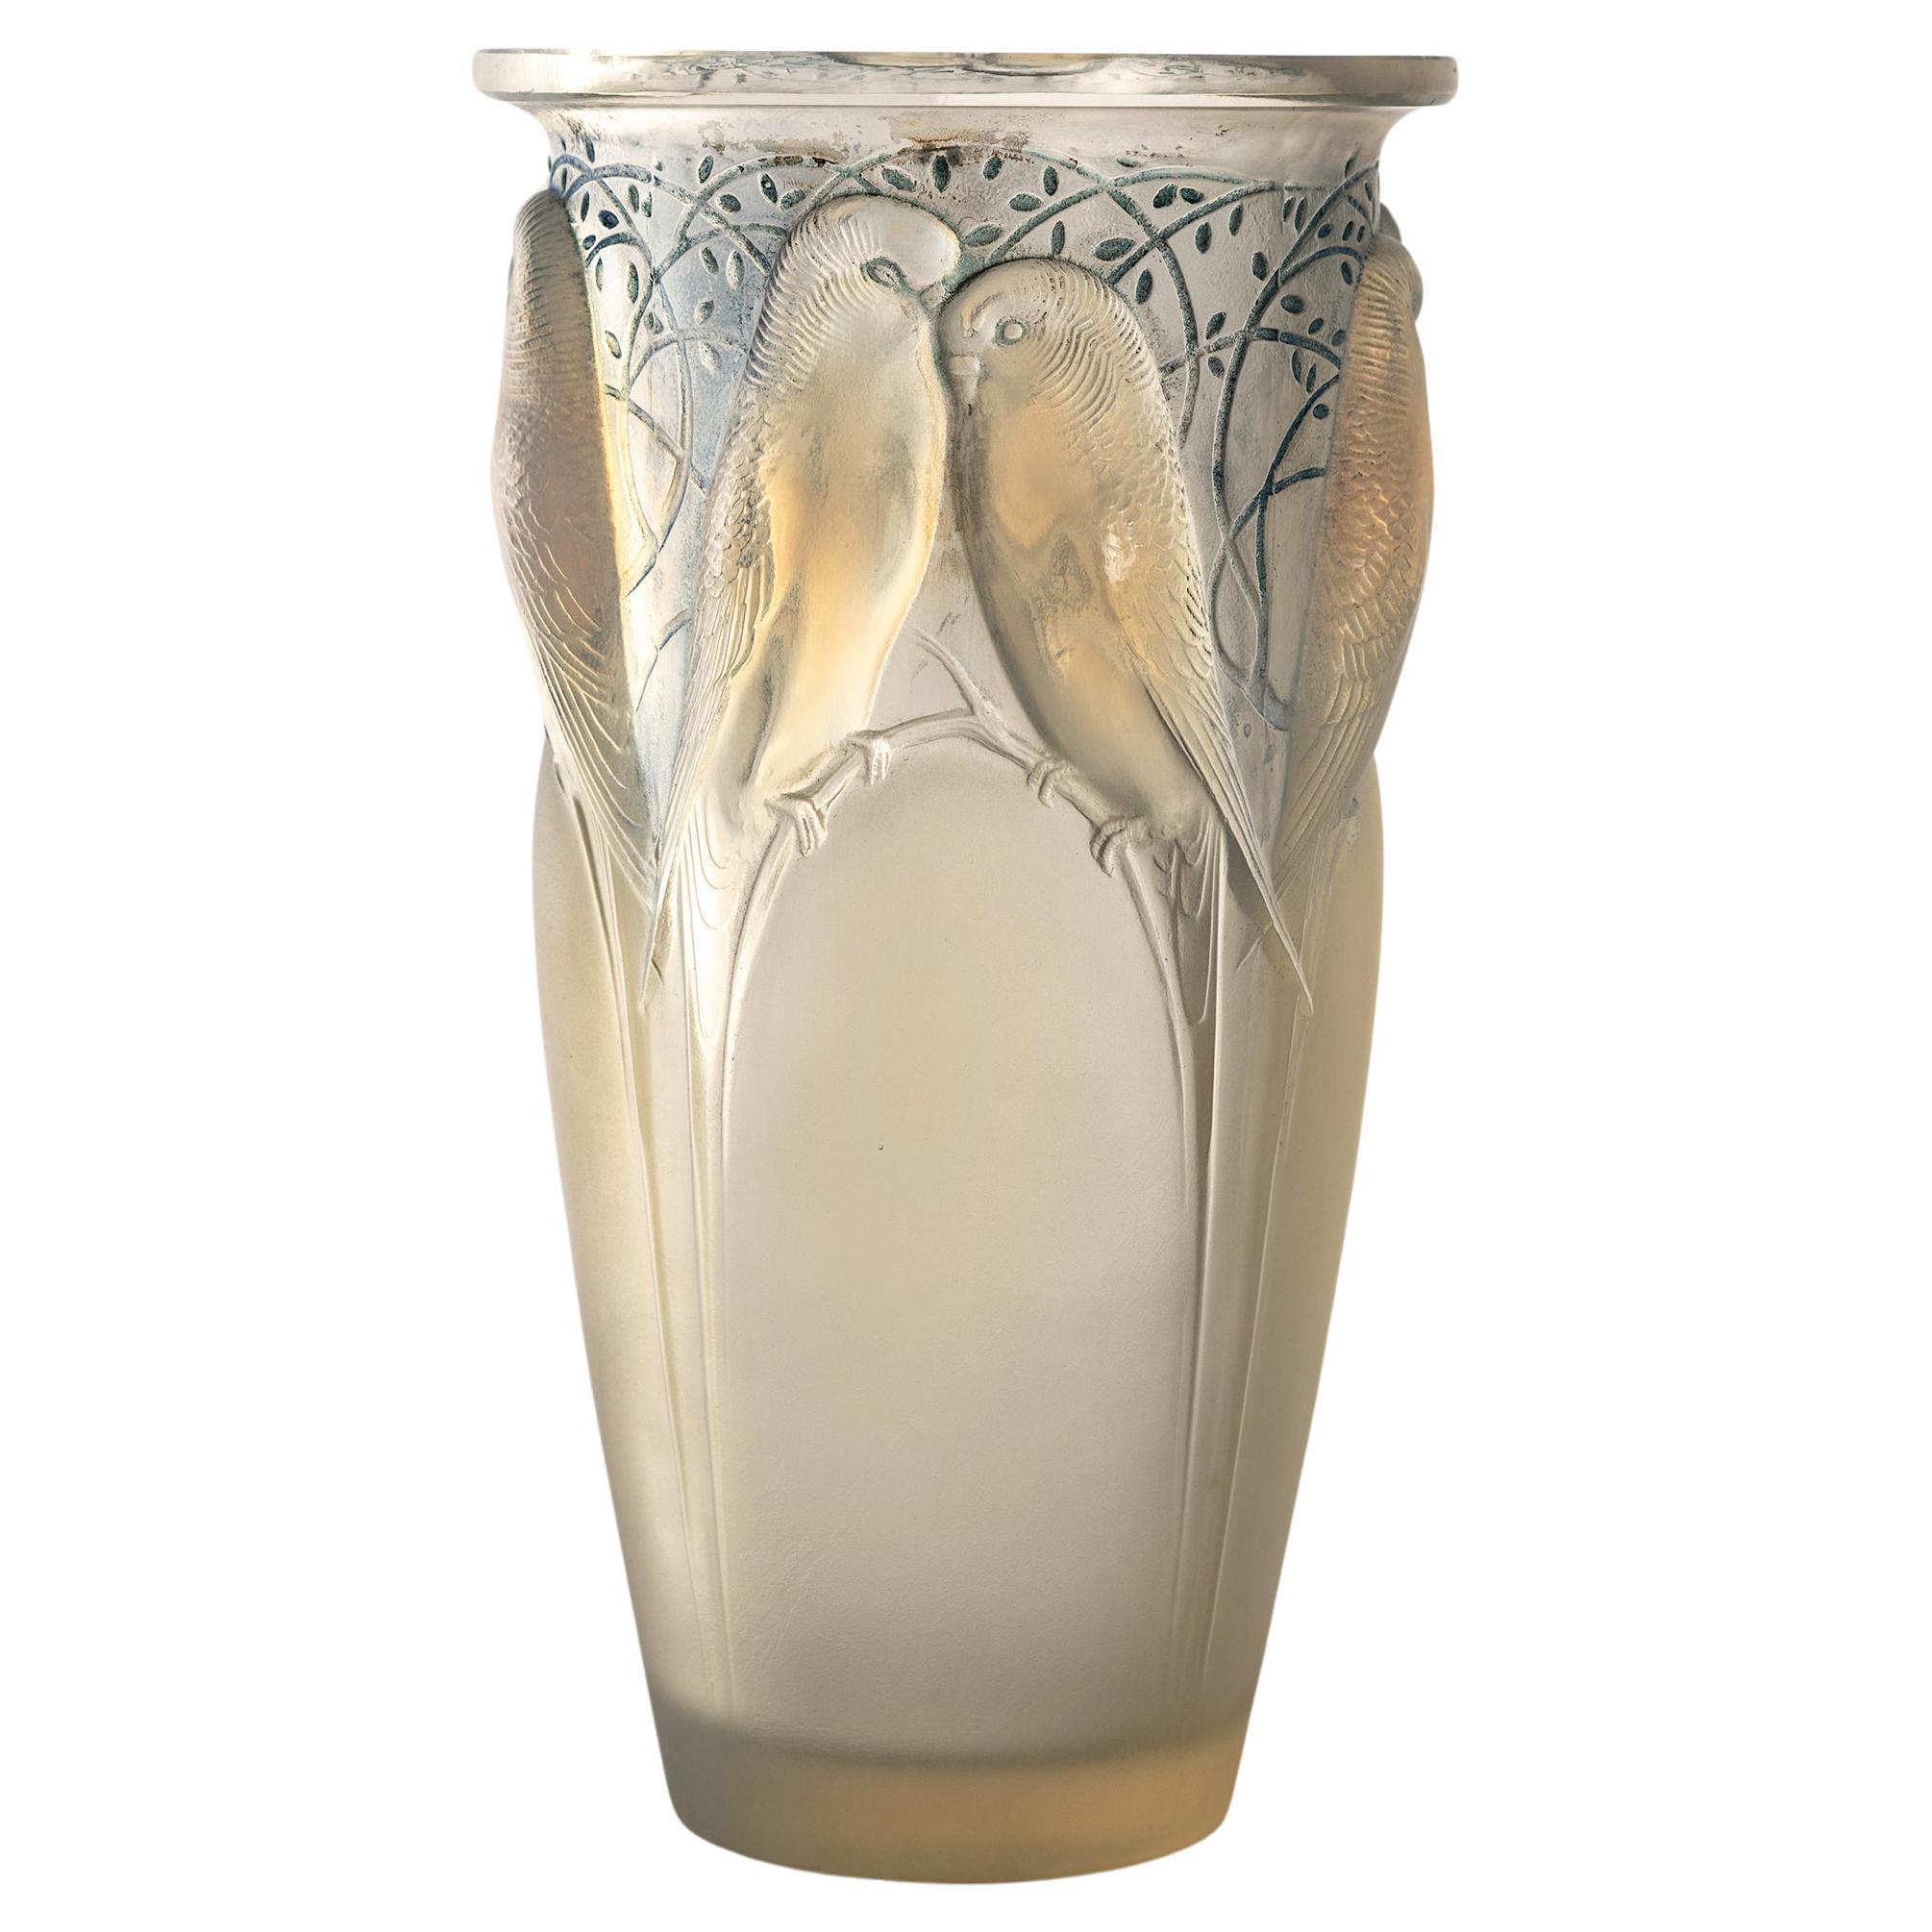 An Art Deco Opalescent glass "Ceylan" vase by René Lalique 1920s